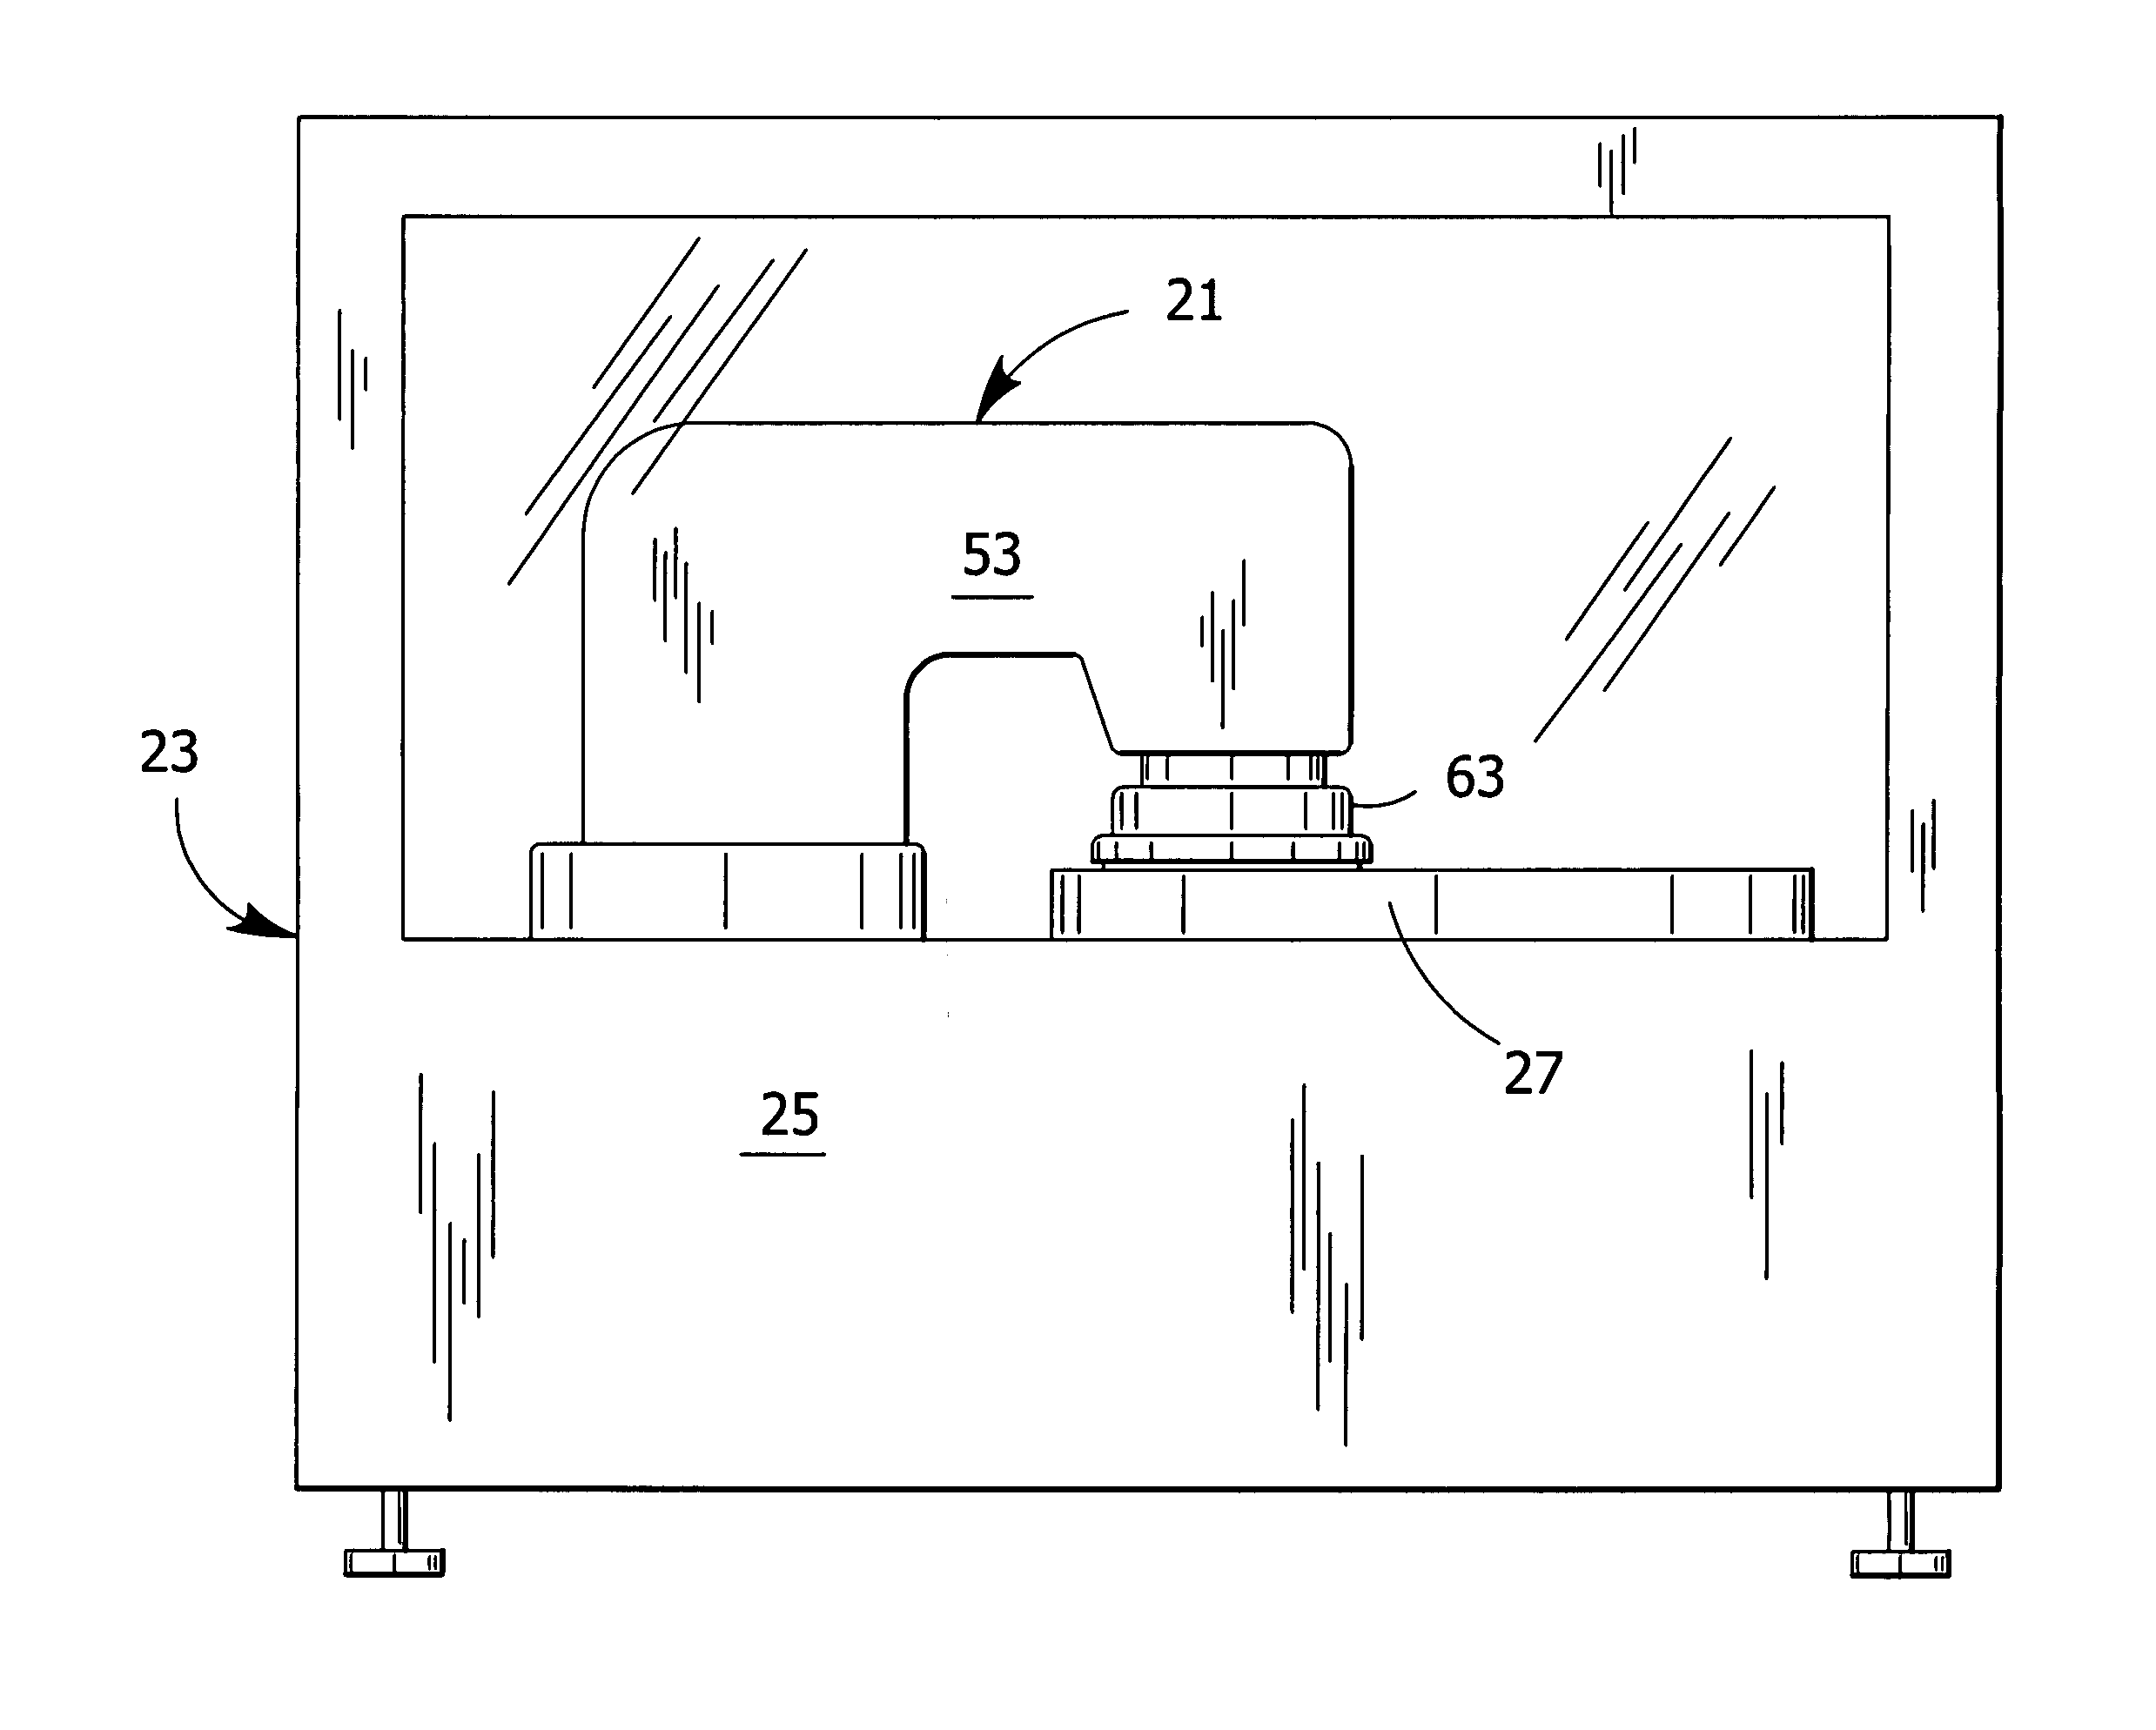 Semiconductor wafer, polishing apparatus and method